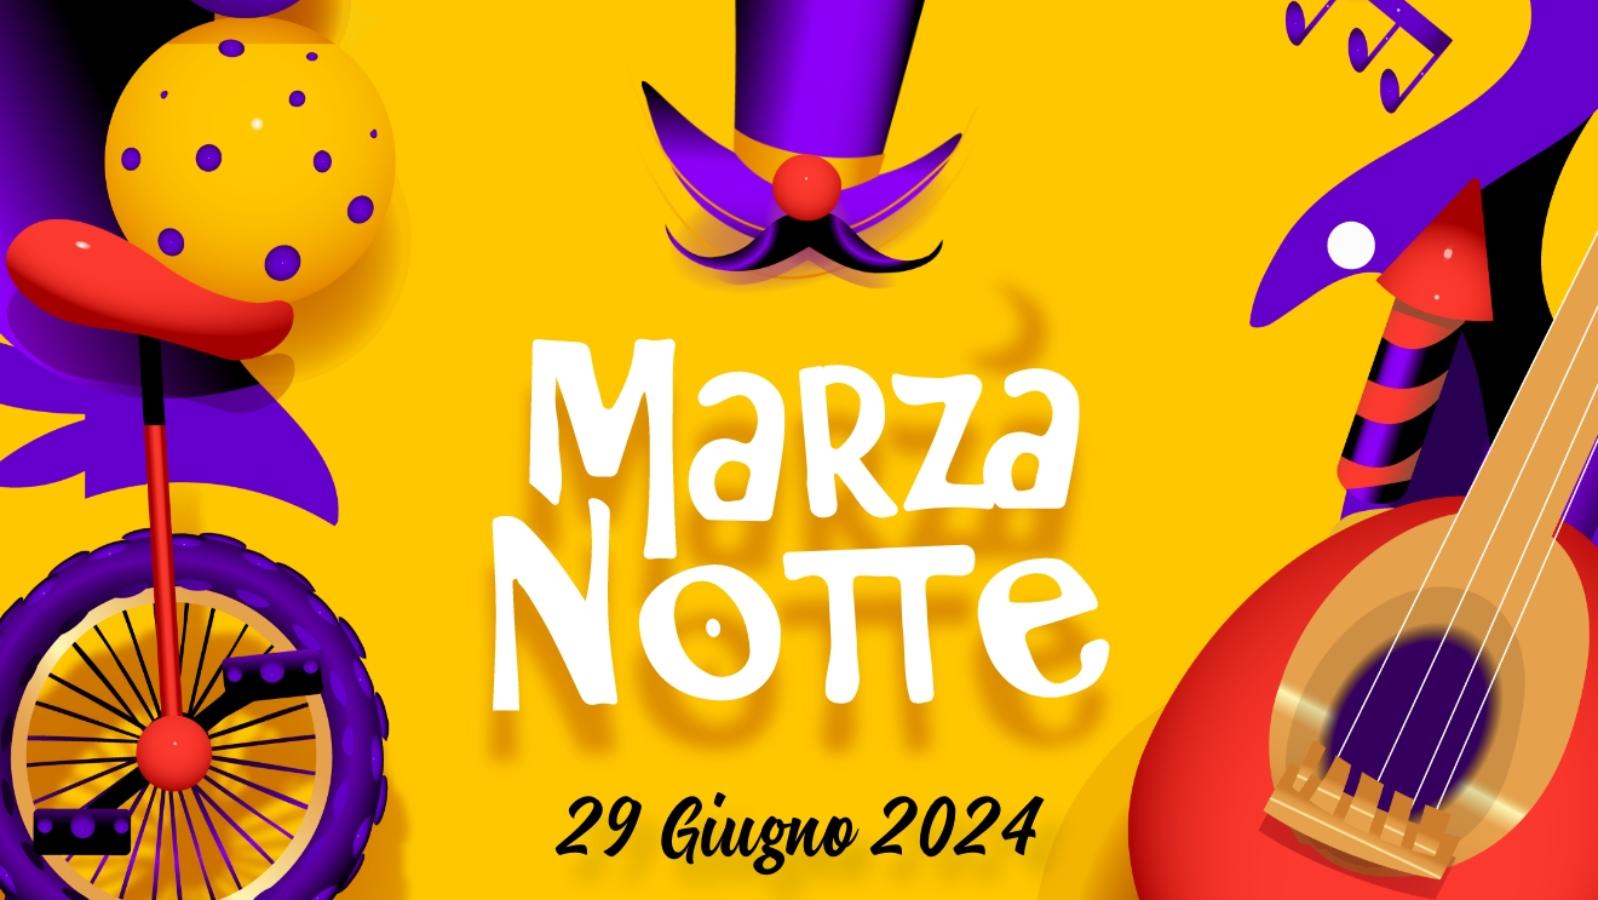 marzanotte 2024 